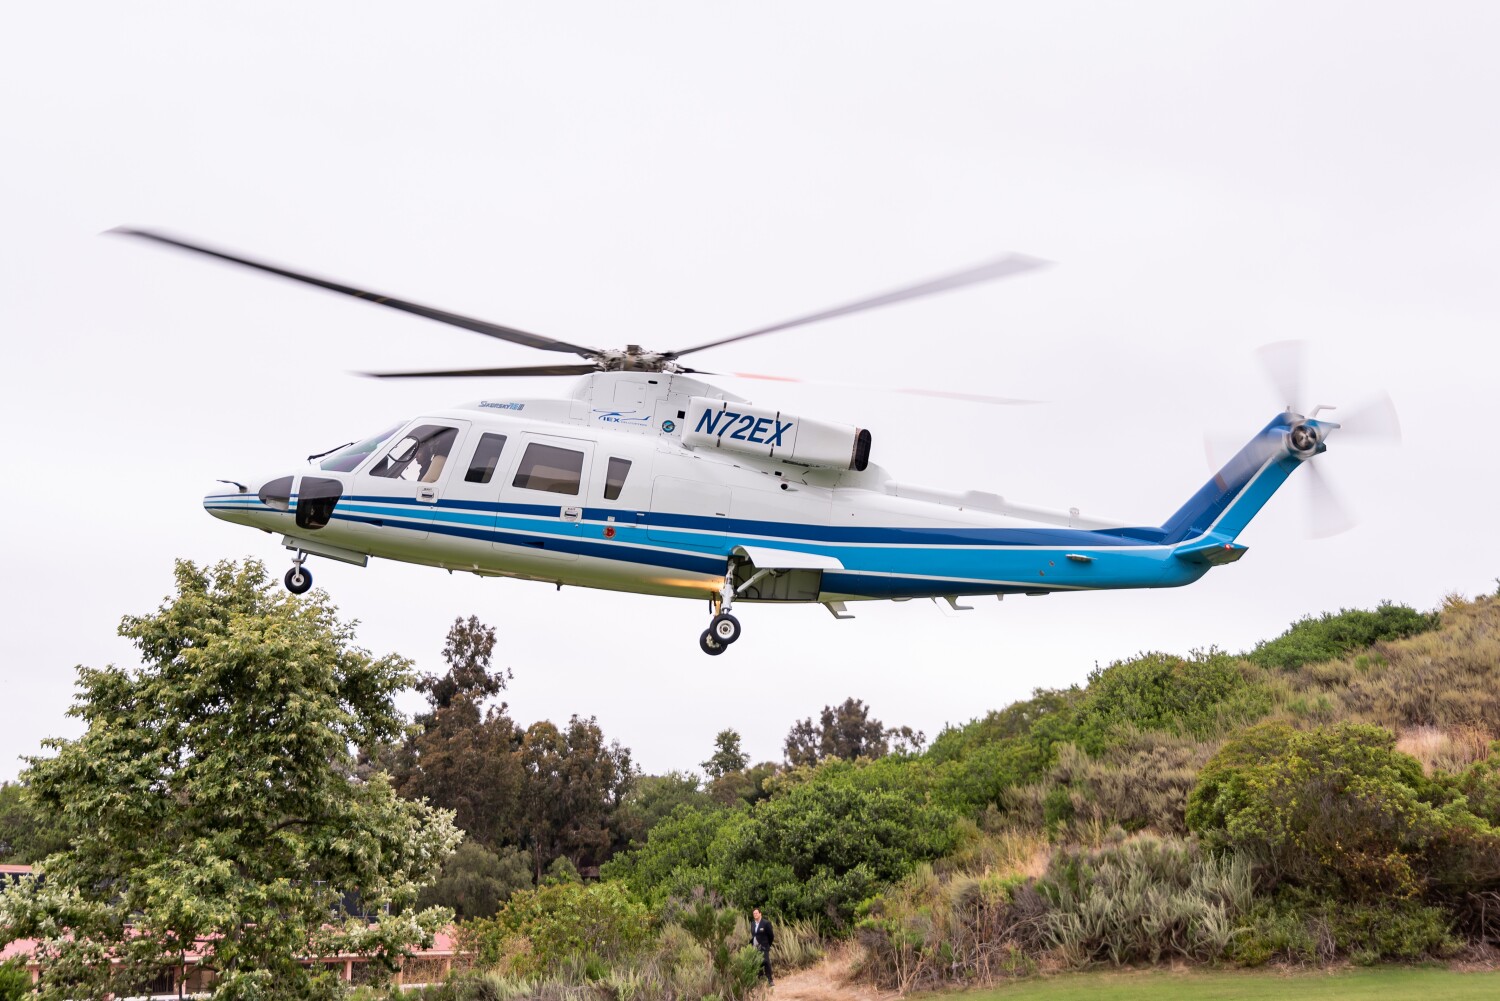 Despite pleas from Vanessa Bryant, investigators, safety rules inspired by Kobe Bryant helicopter crash stall